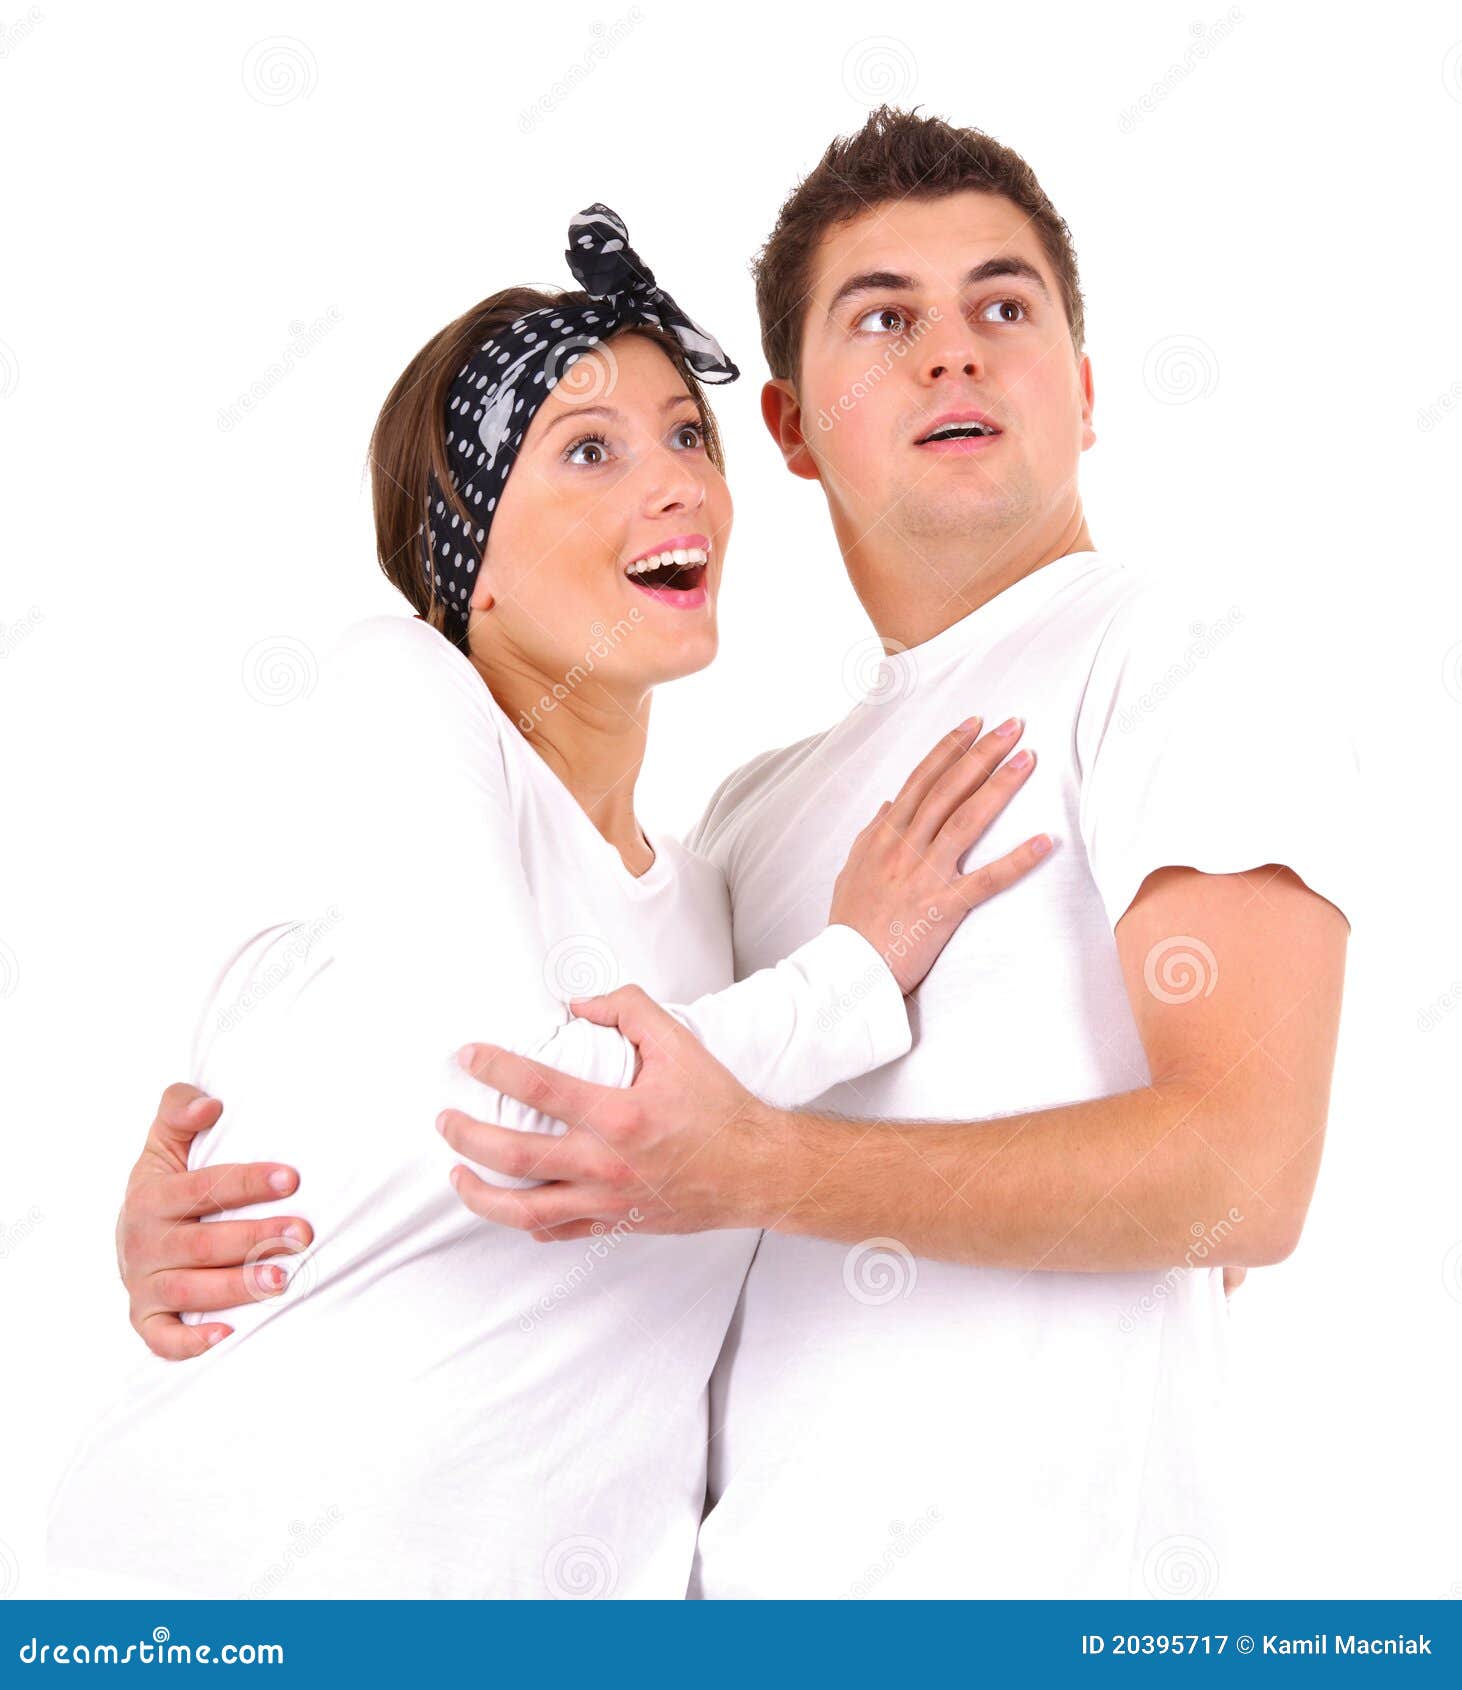 Surprised Couple